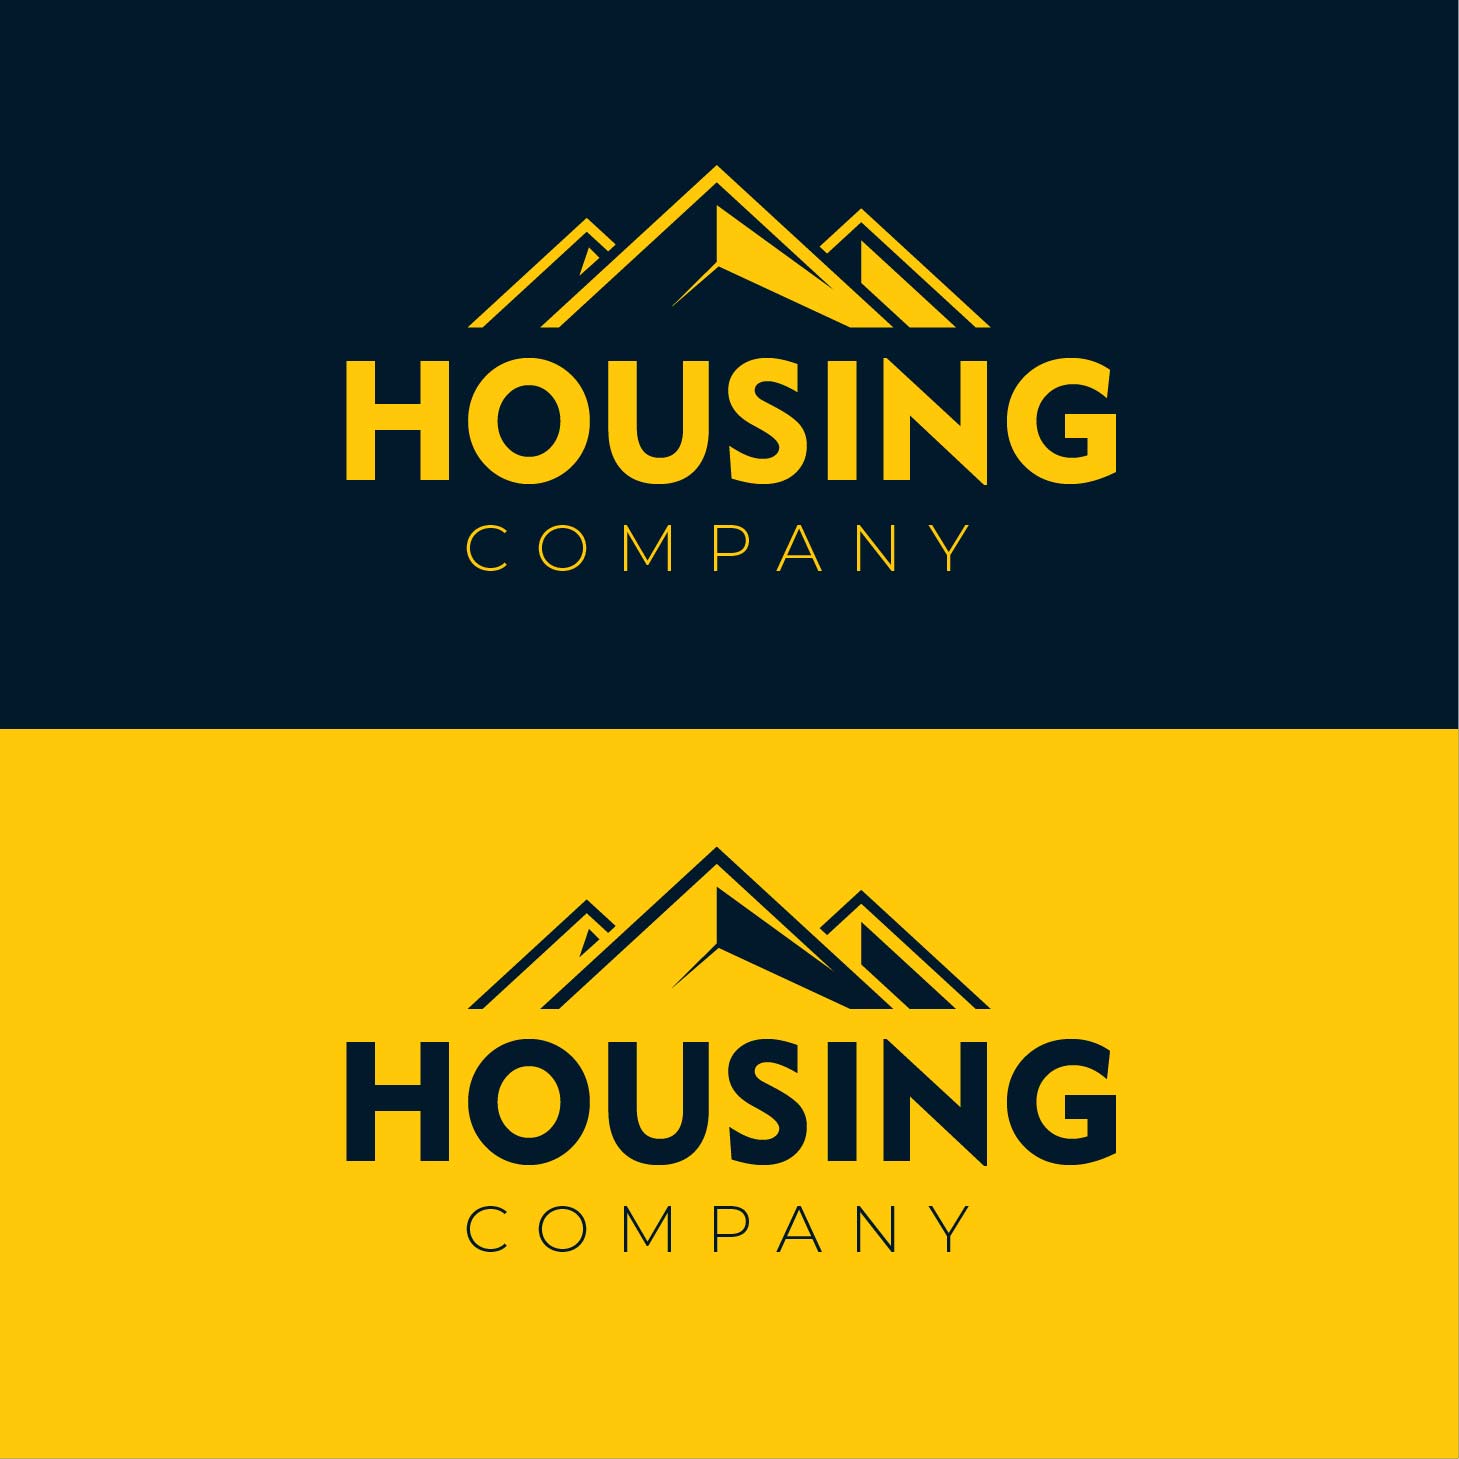 Corporate Property housing company logo free vector